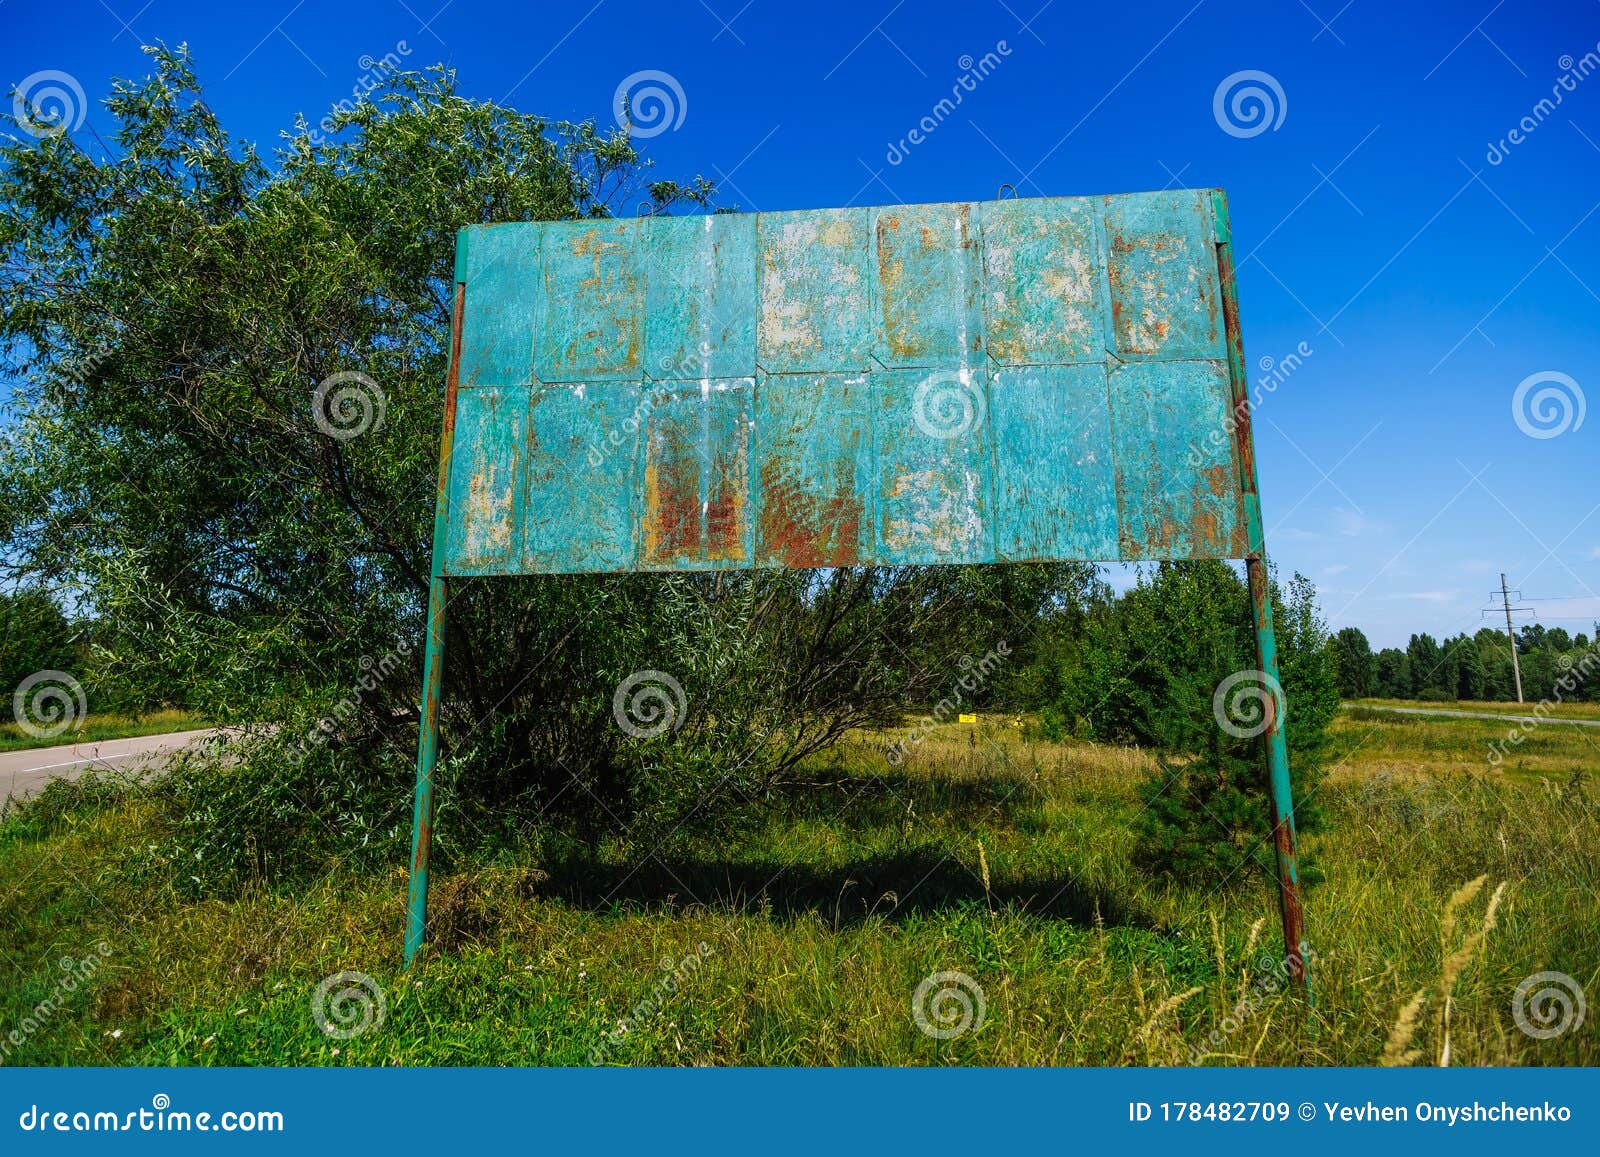 old rusty billboard in ghost town pripyat chornobyl zone